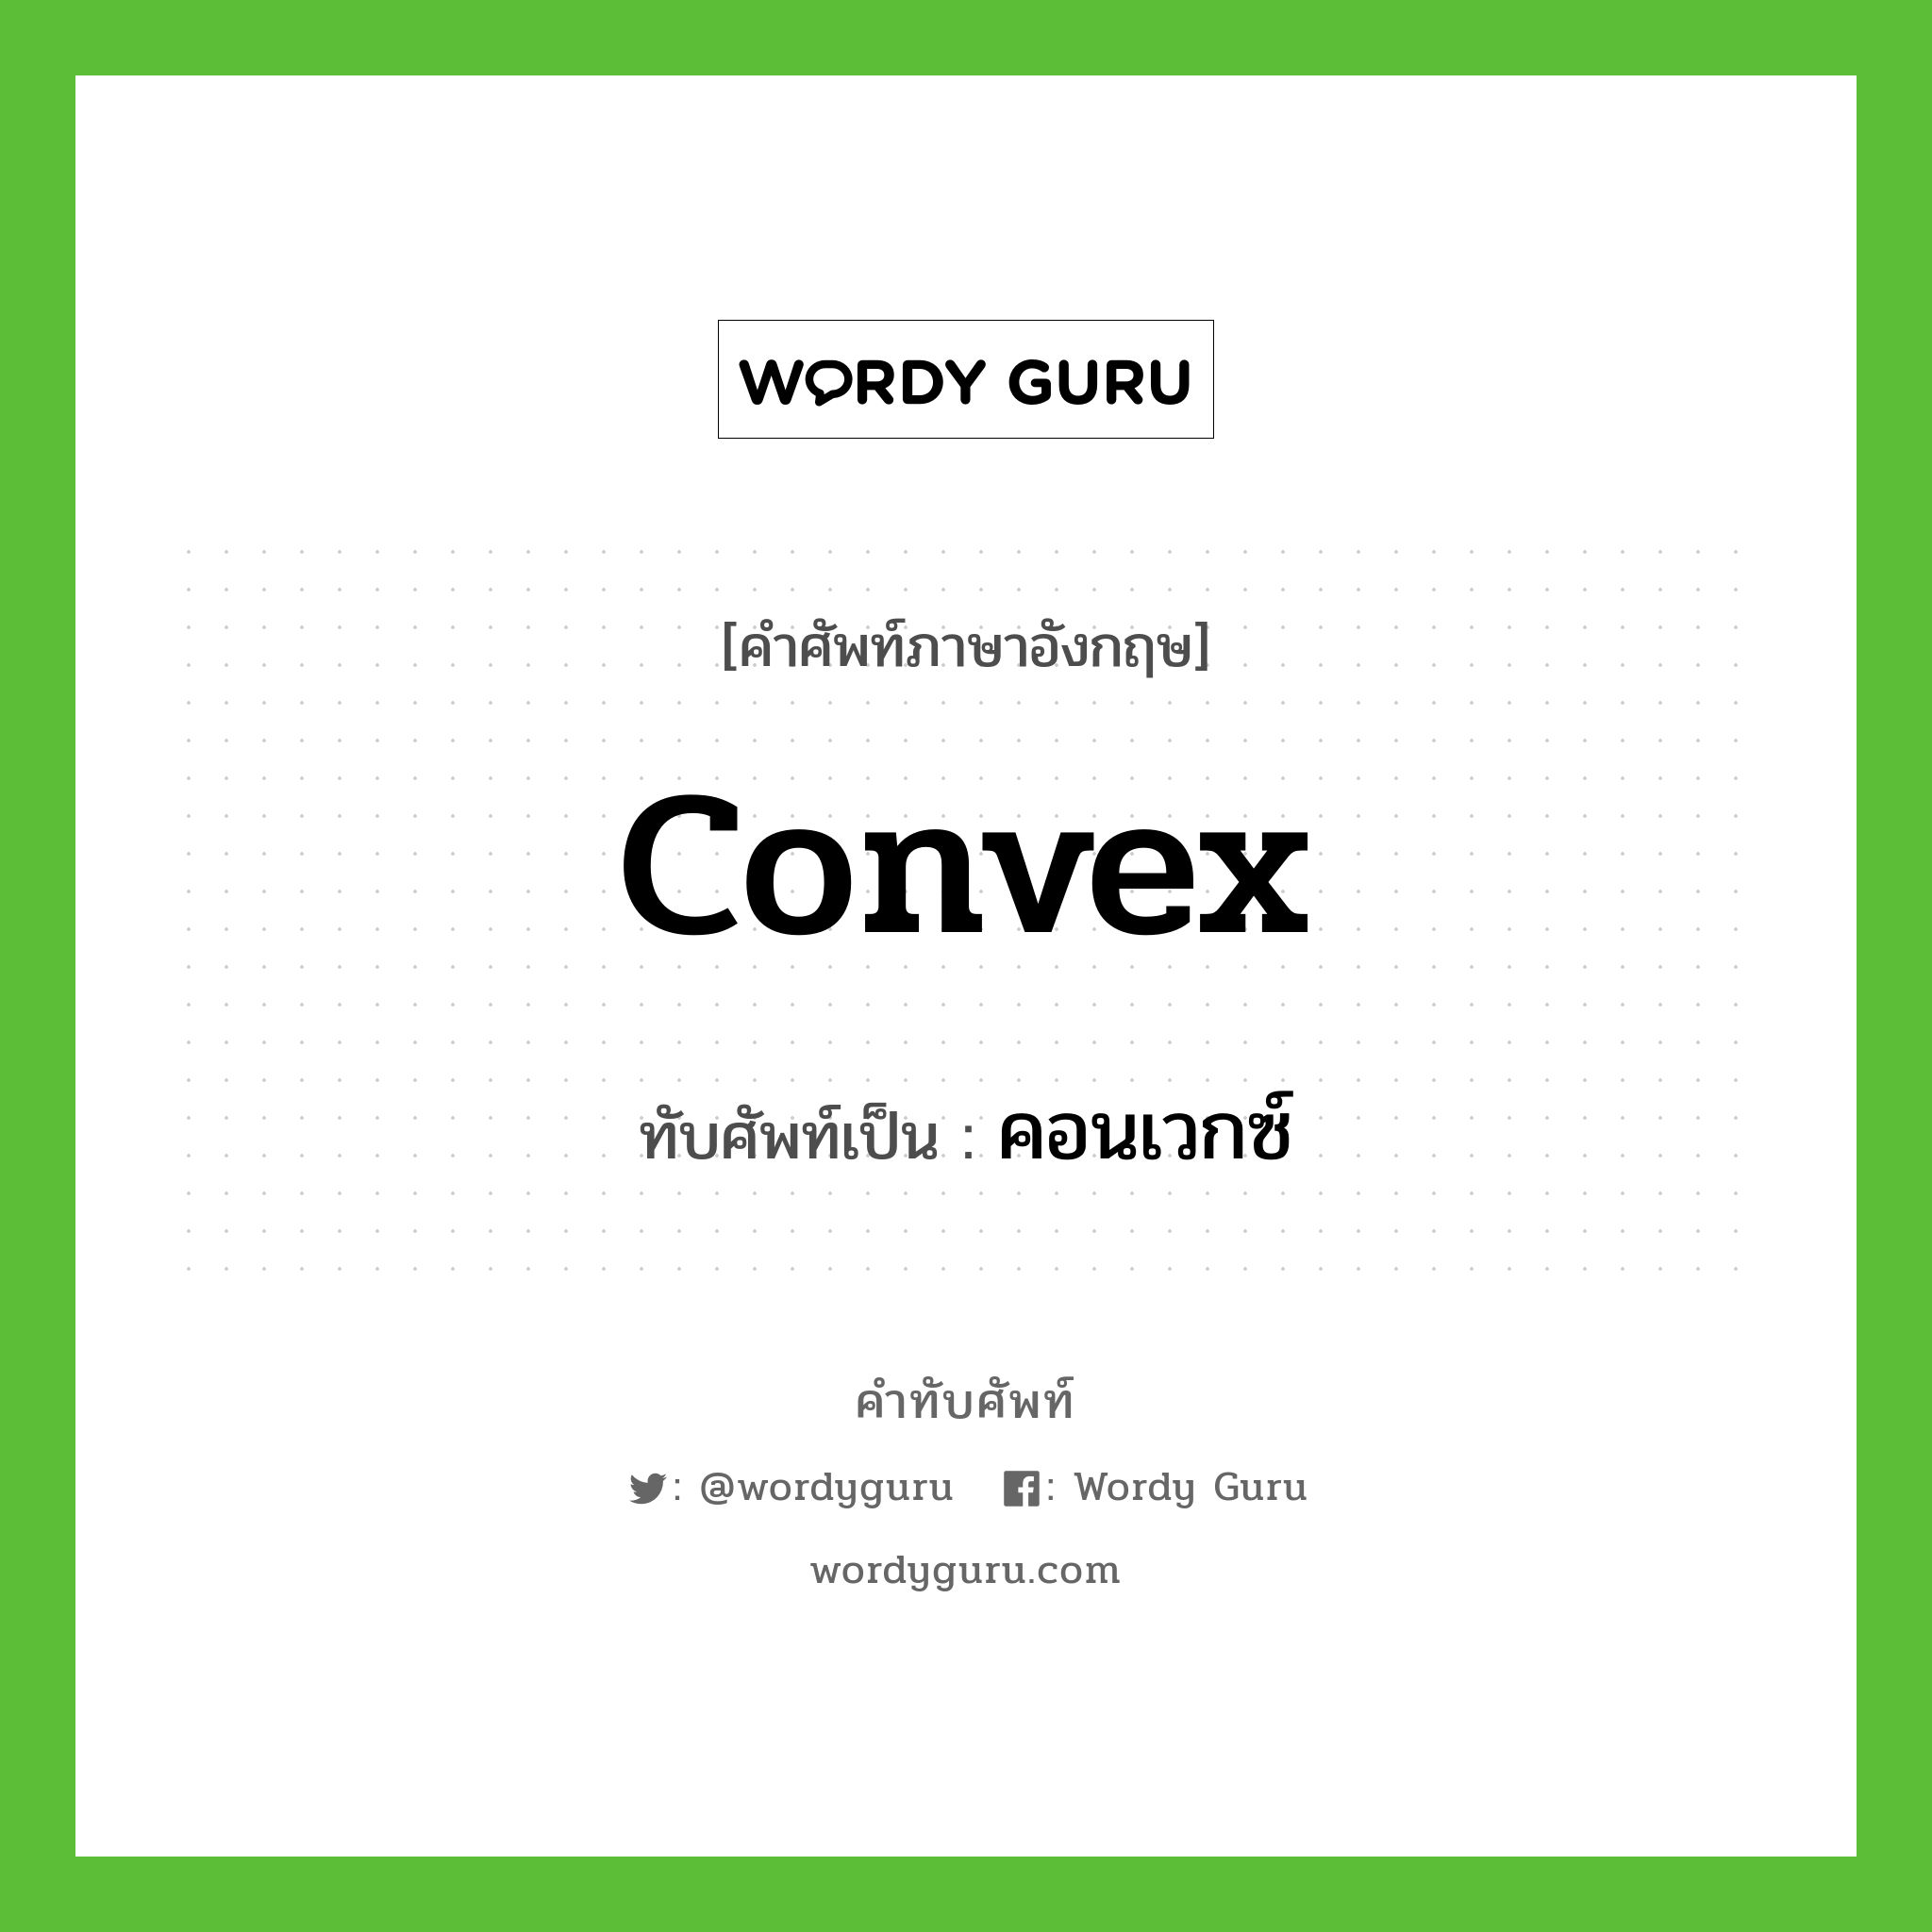 convex เขียนเป็นคำไทยว่าอะไร?, คำศัพท์ภาษาอังกฤษ convex ทับศัพท์เป็น คอนเวกซ์